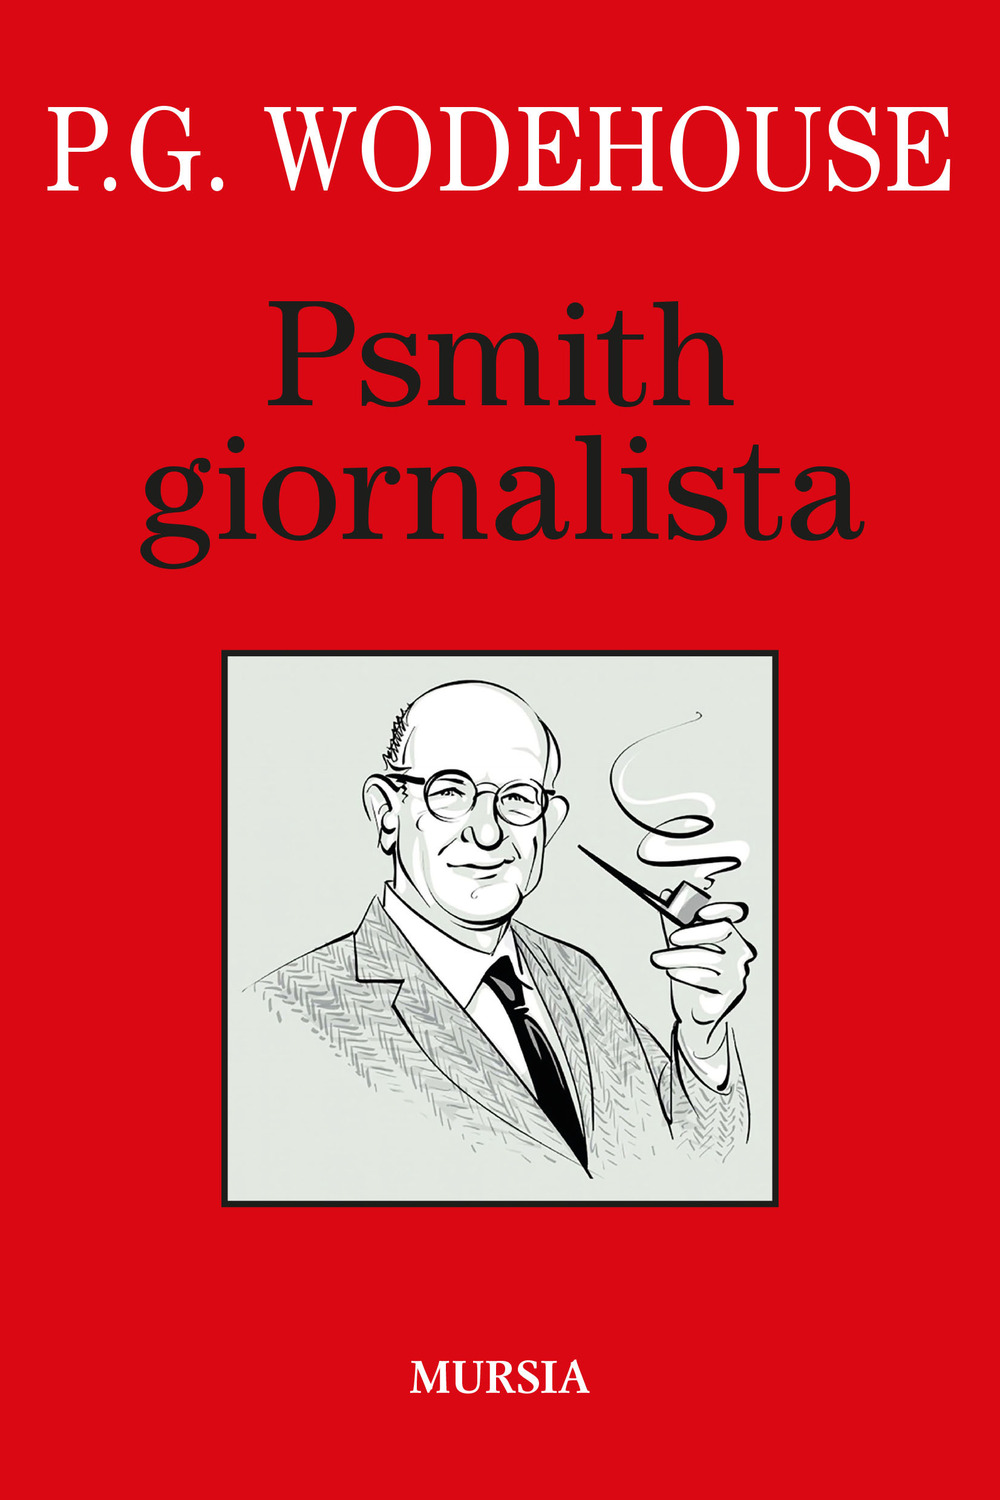 Psmith giornalista